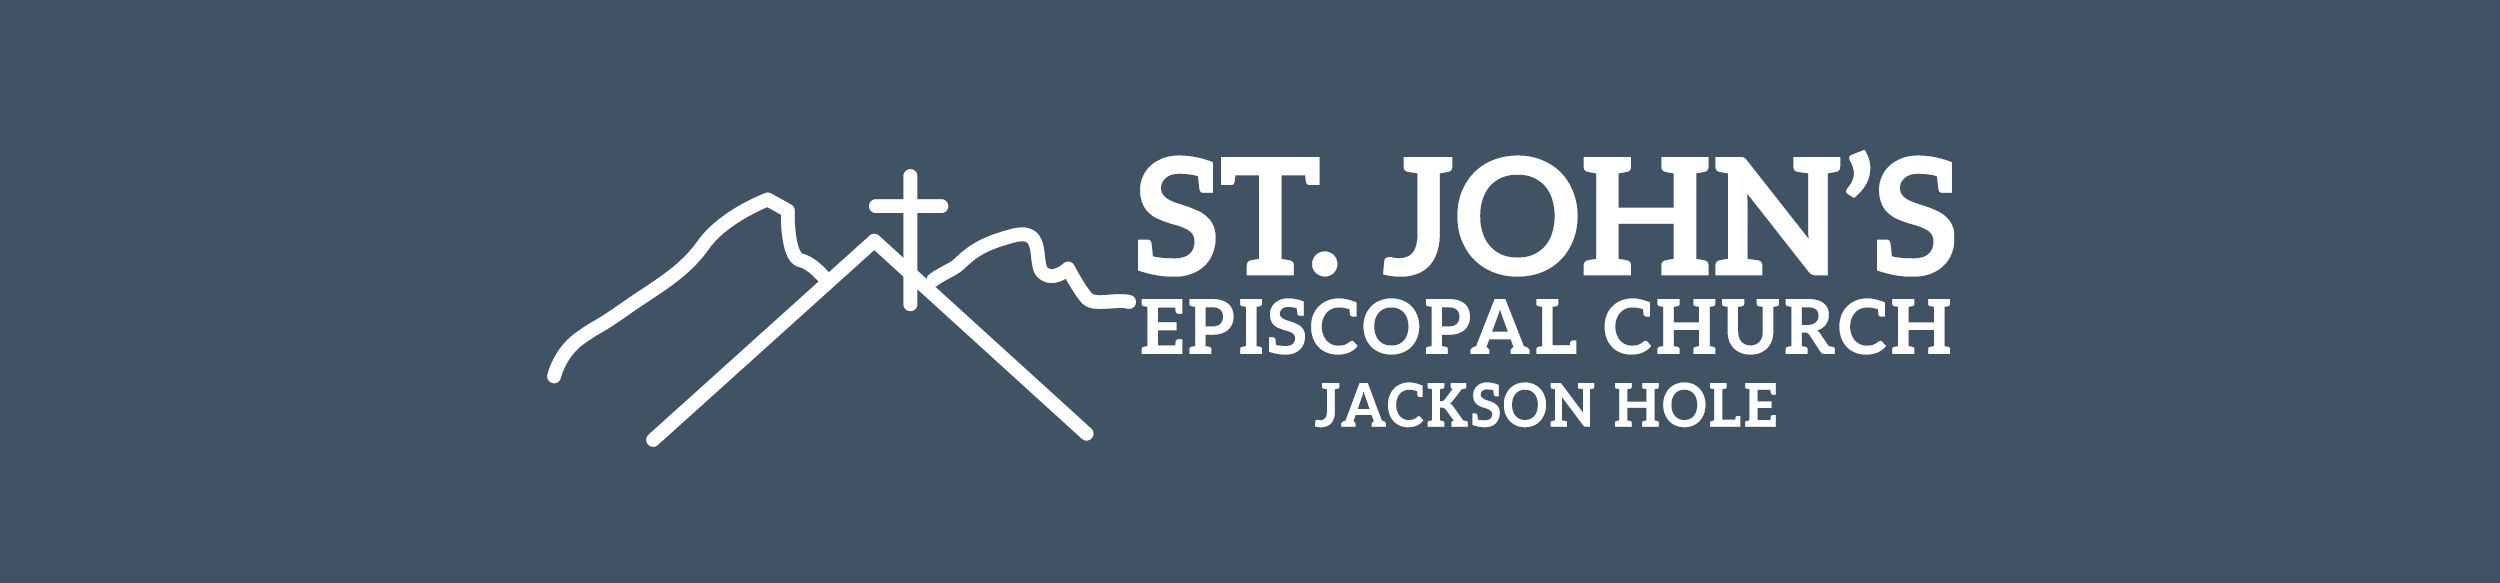 St. John's Episcopal Church - Jackson, WY | St. John's Episcopal Church